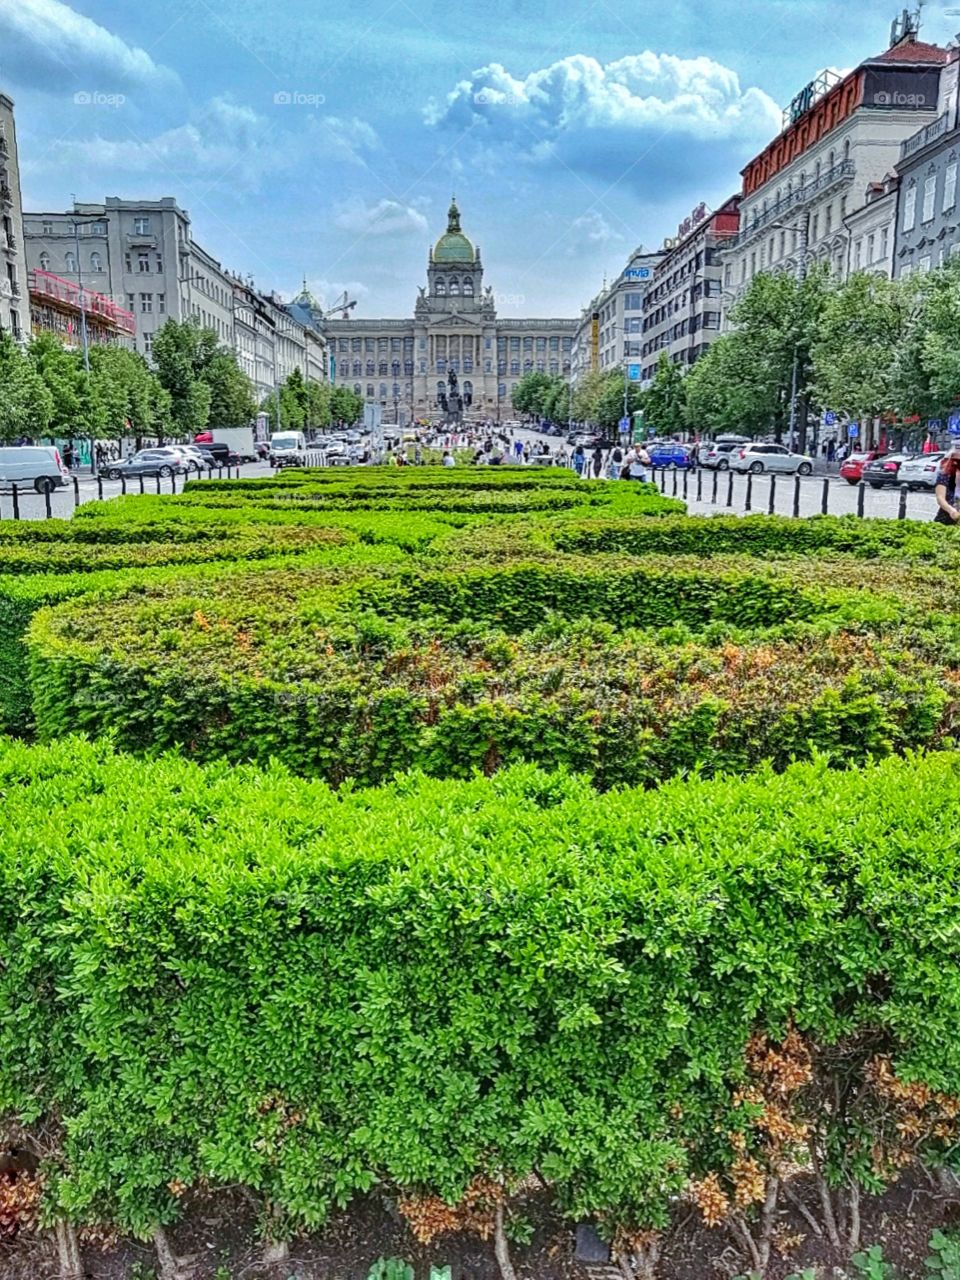 One of the main squares of Prague